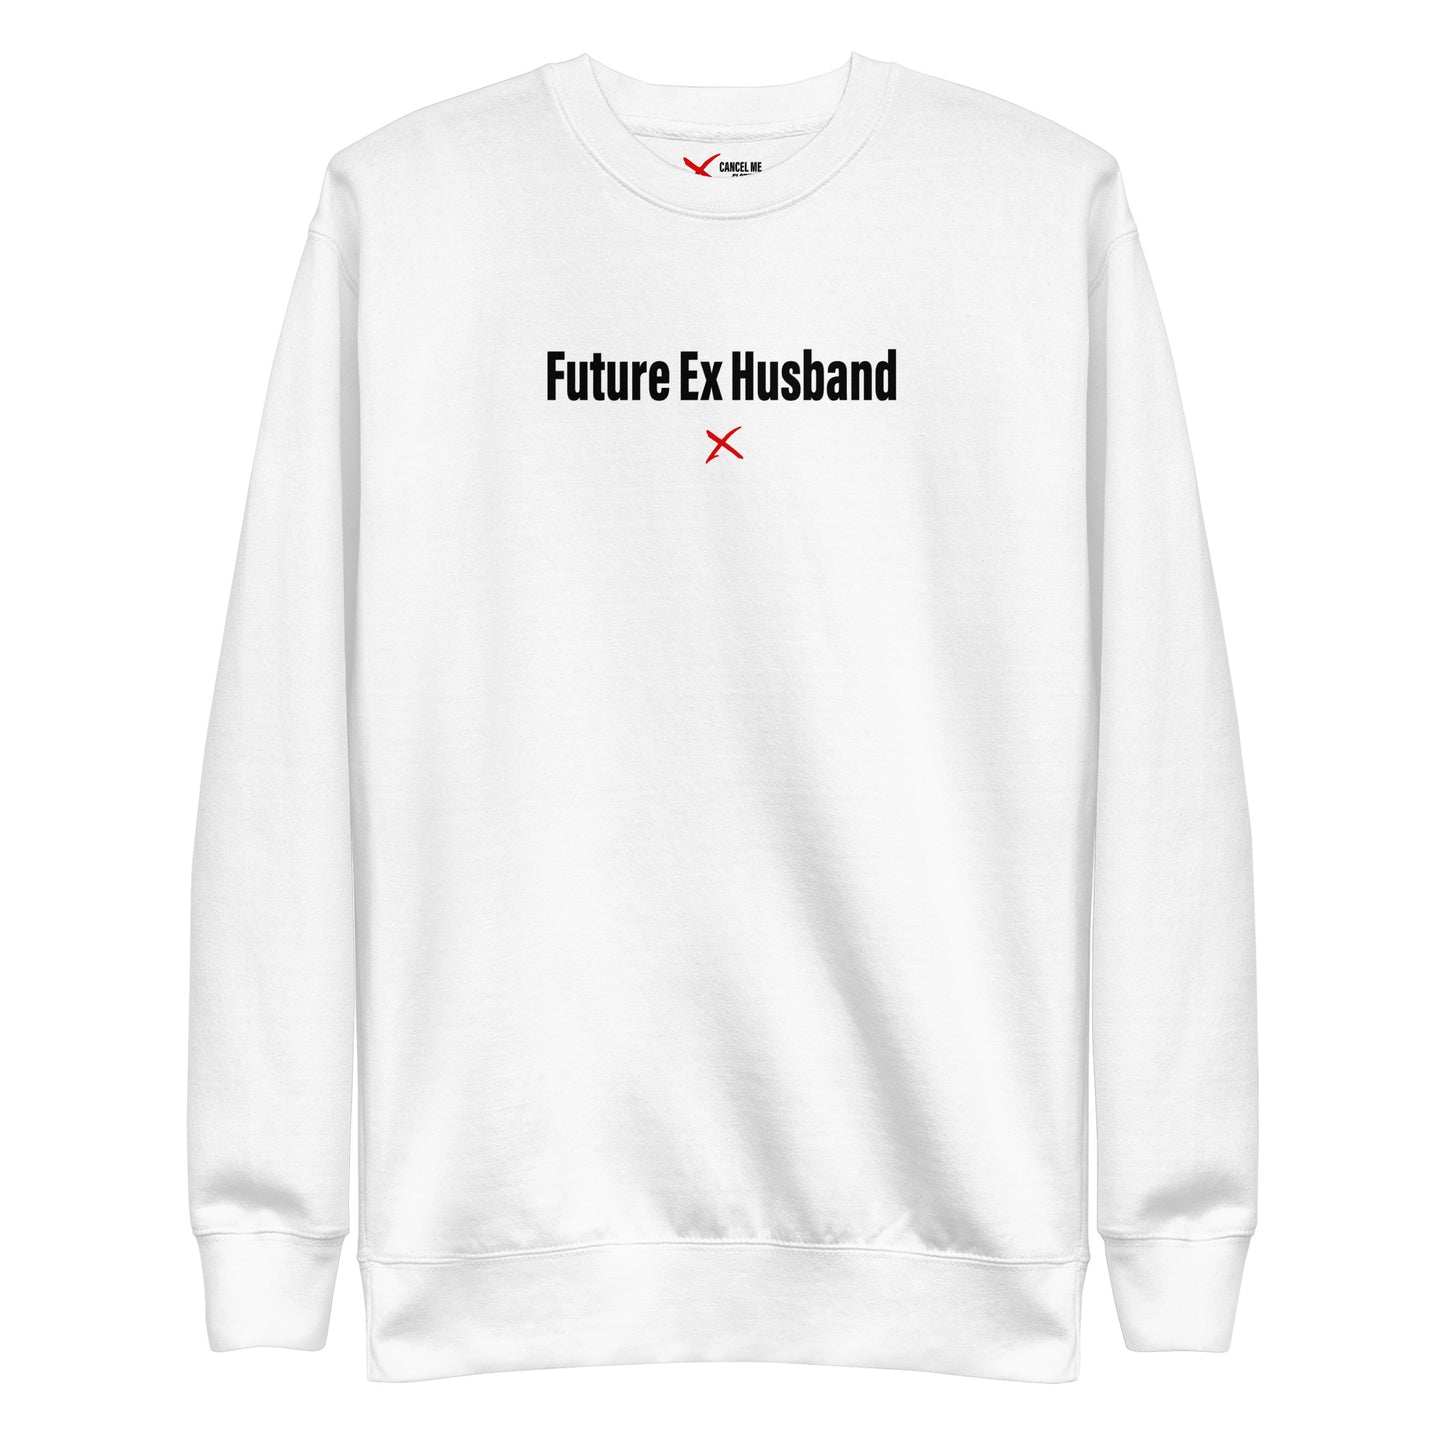 Future Ex Husband - Sweatshirt